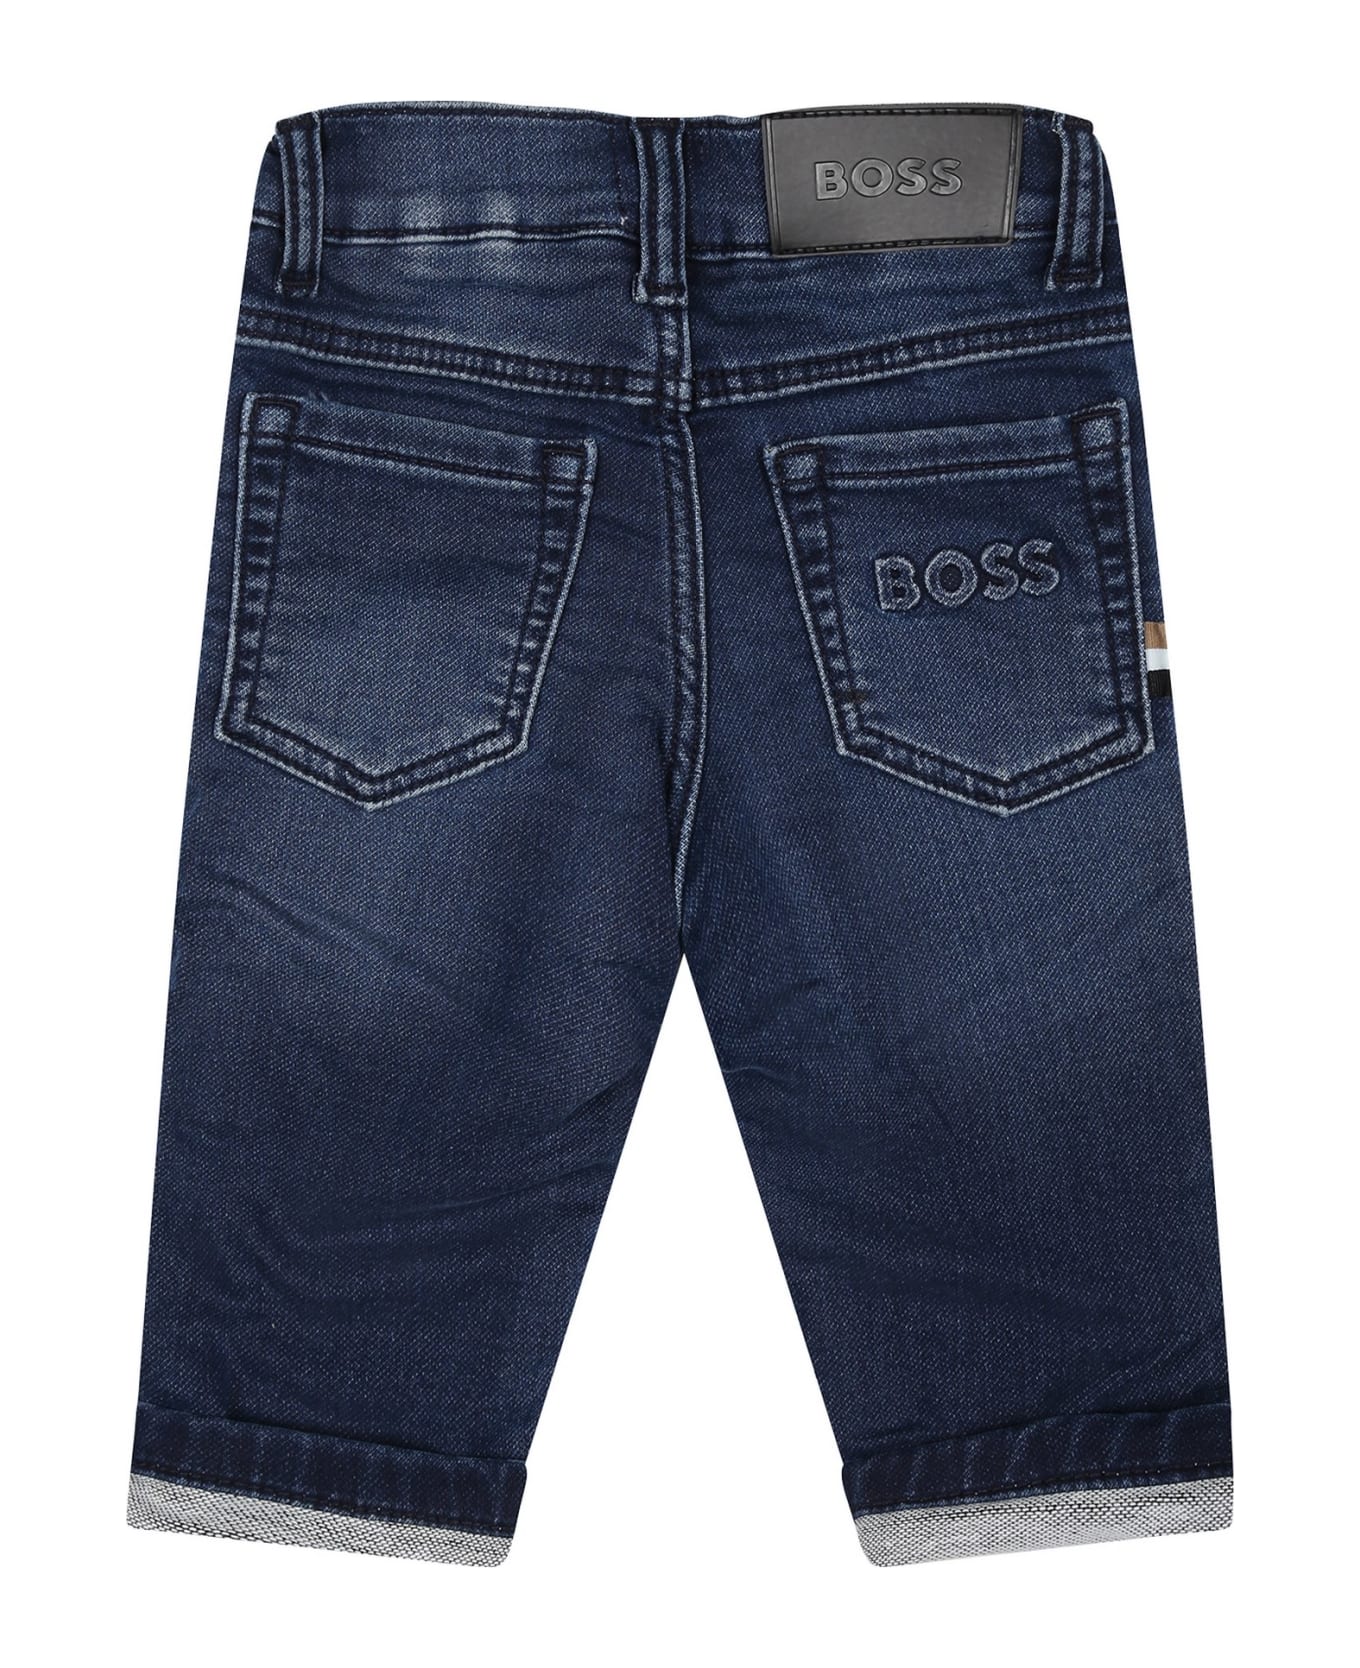 Hugo Boss Denim Jeans For Baby Boy With Logo - Denim